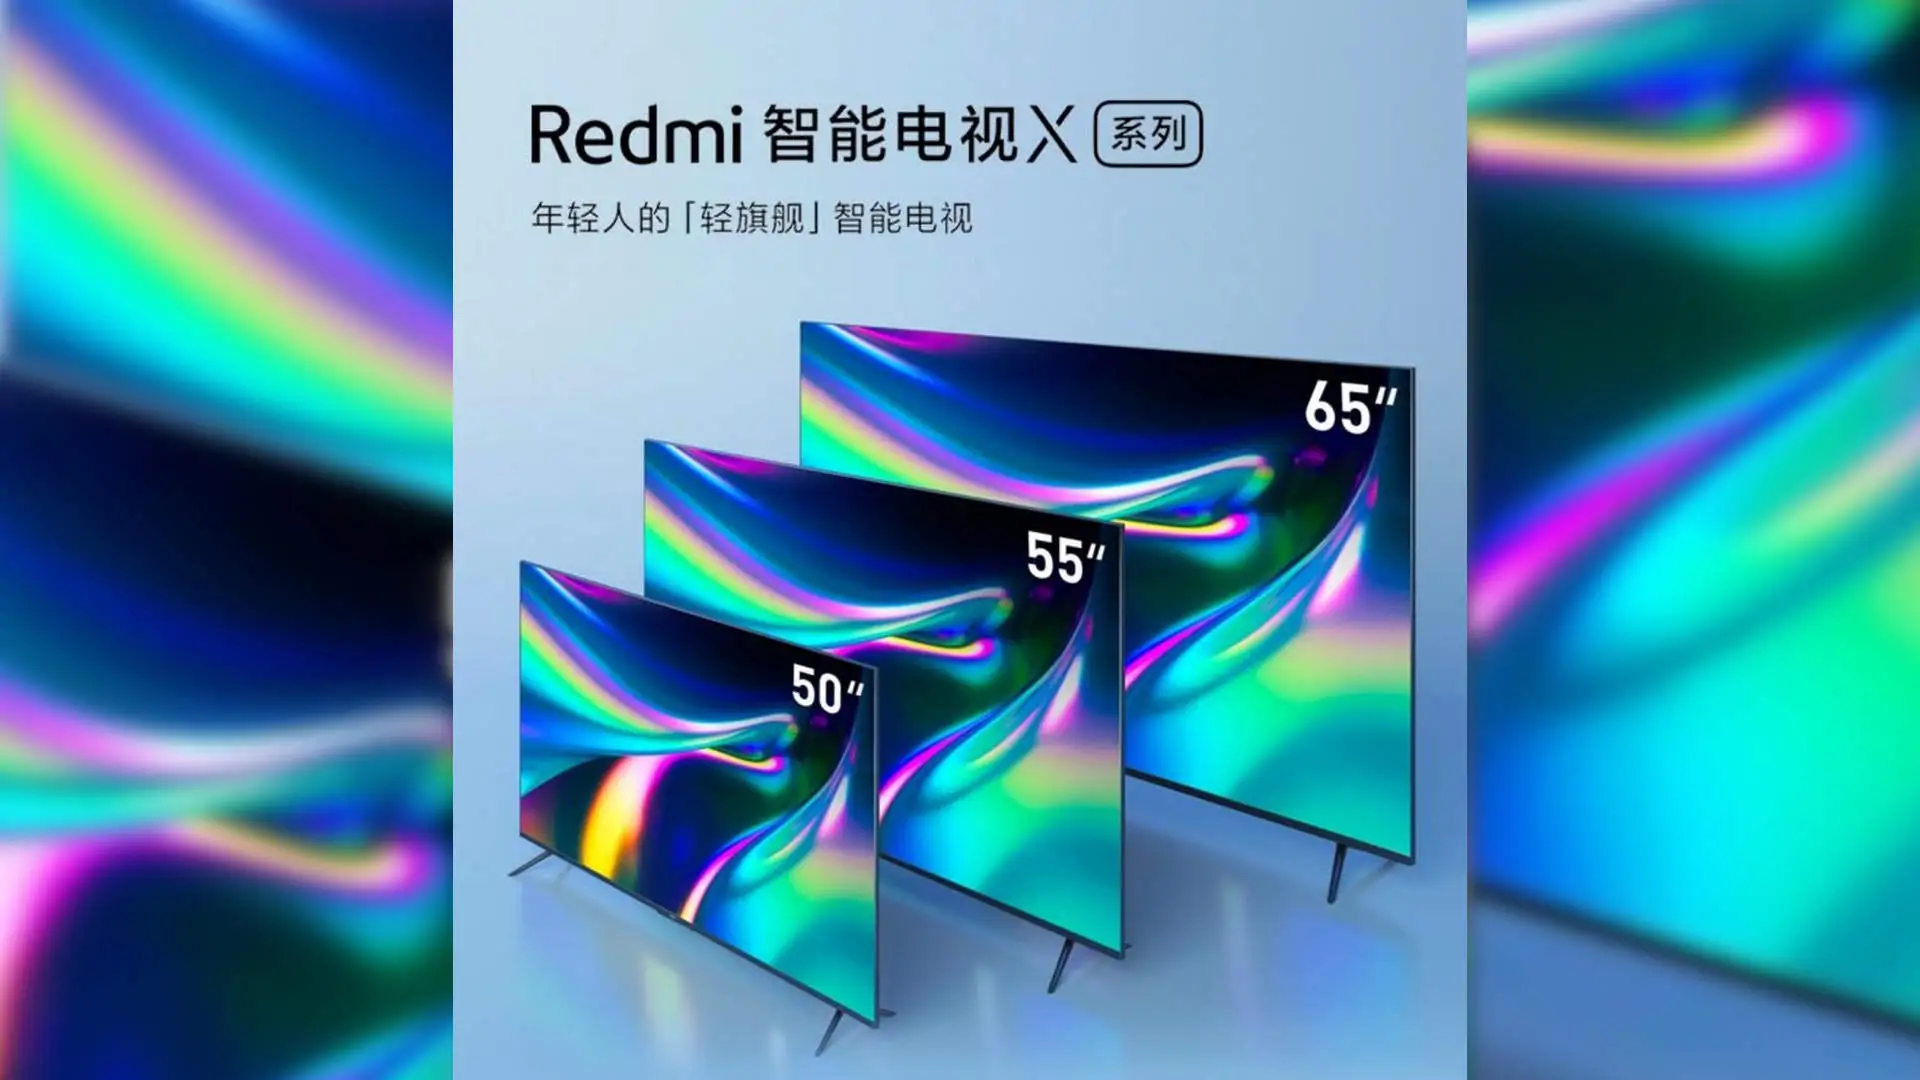 Redmi, üç farklı boyutta Smart TV tanıttı.